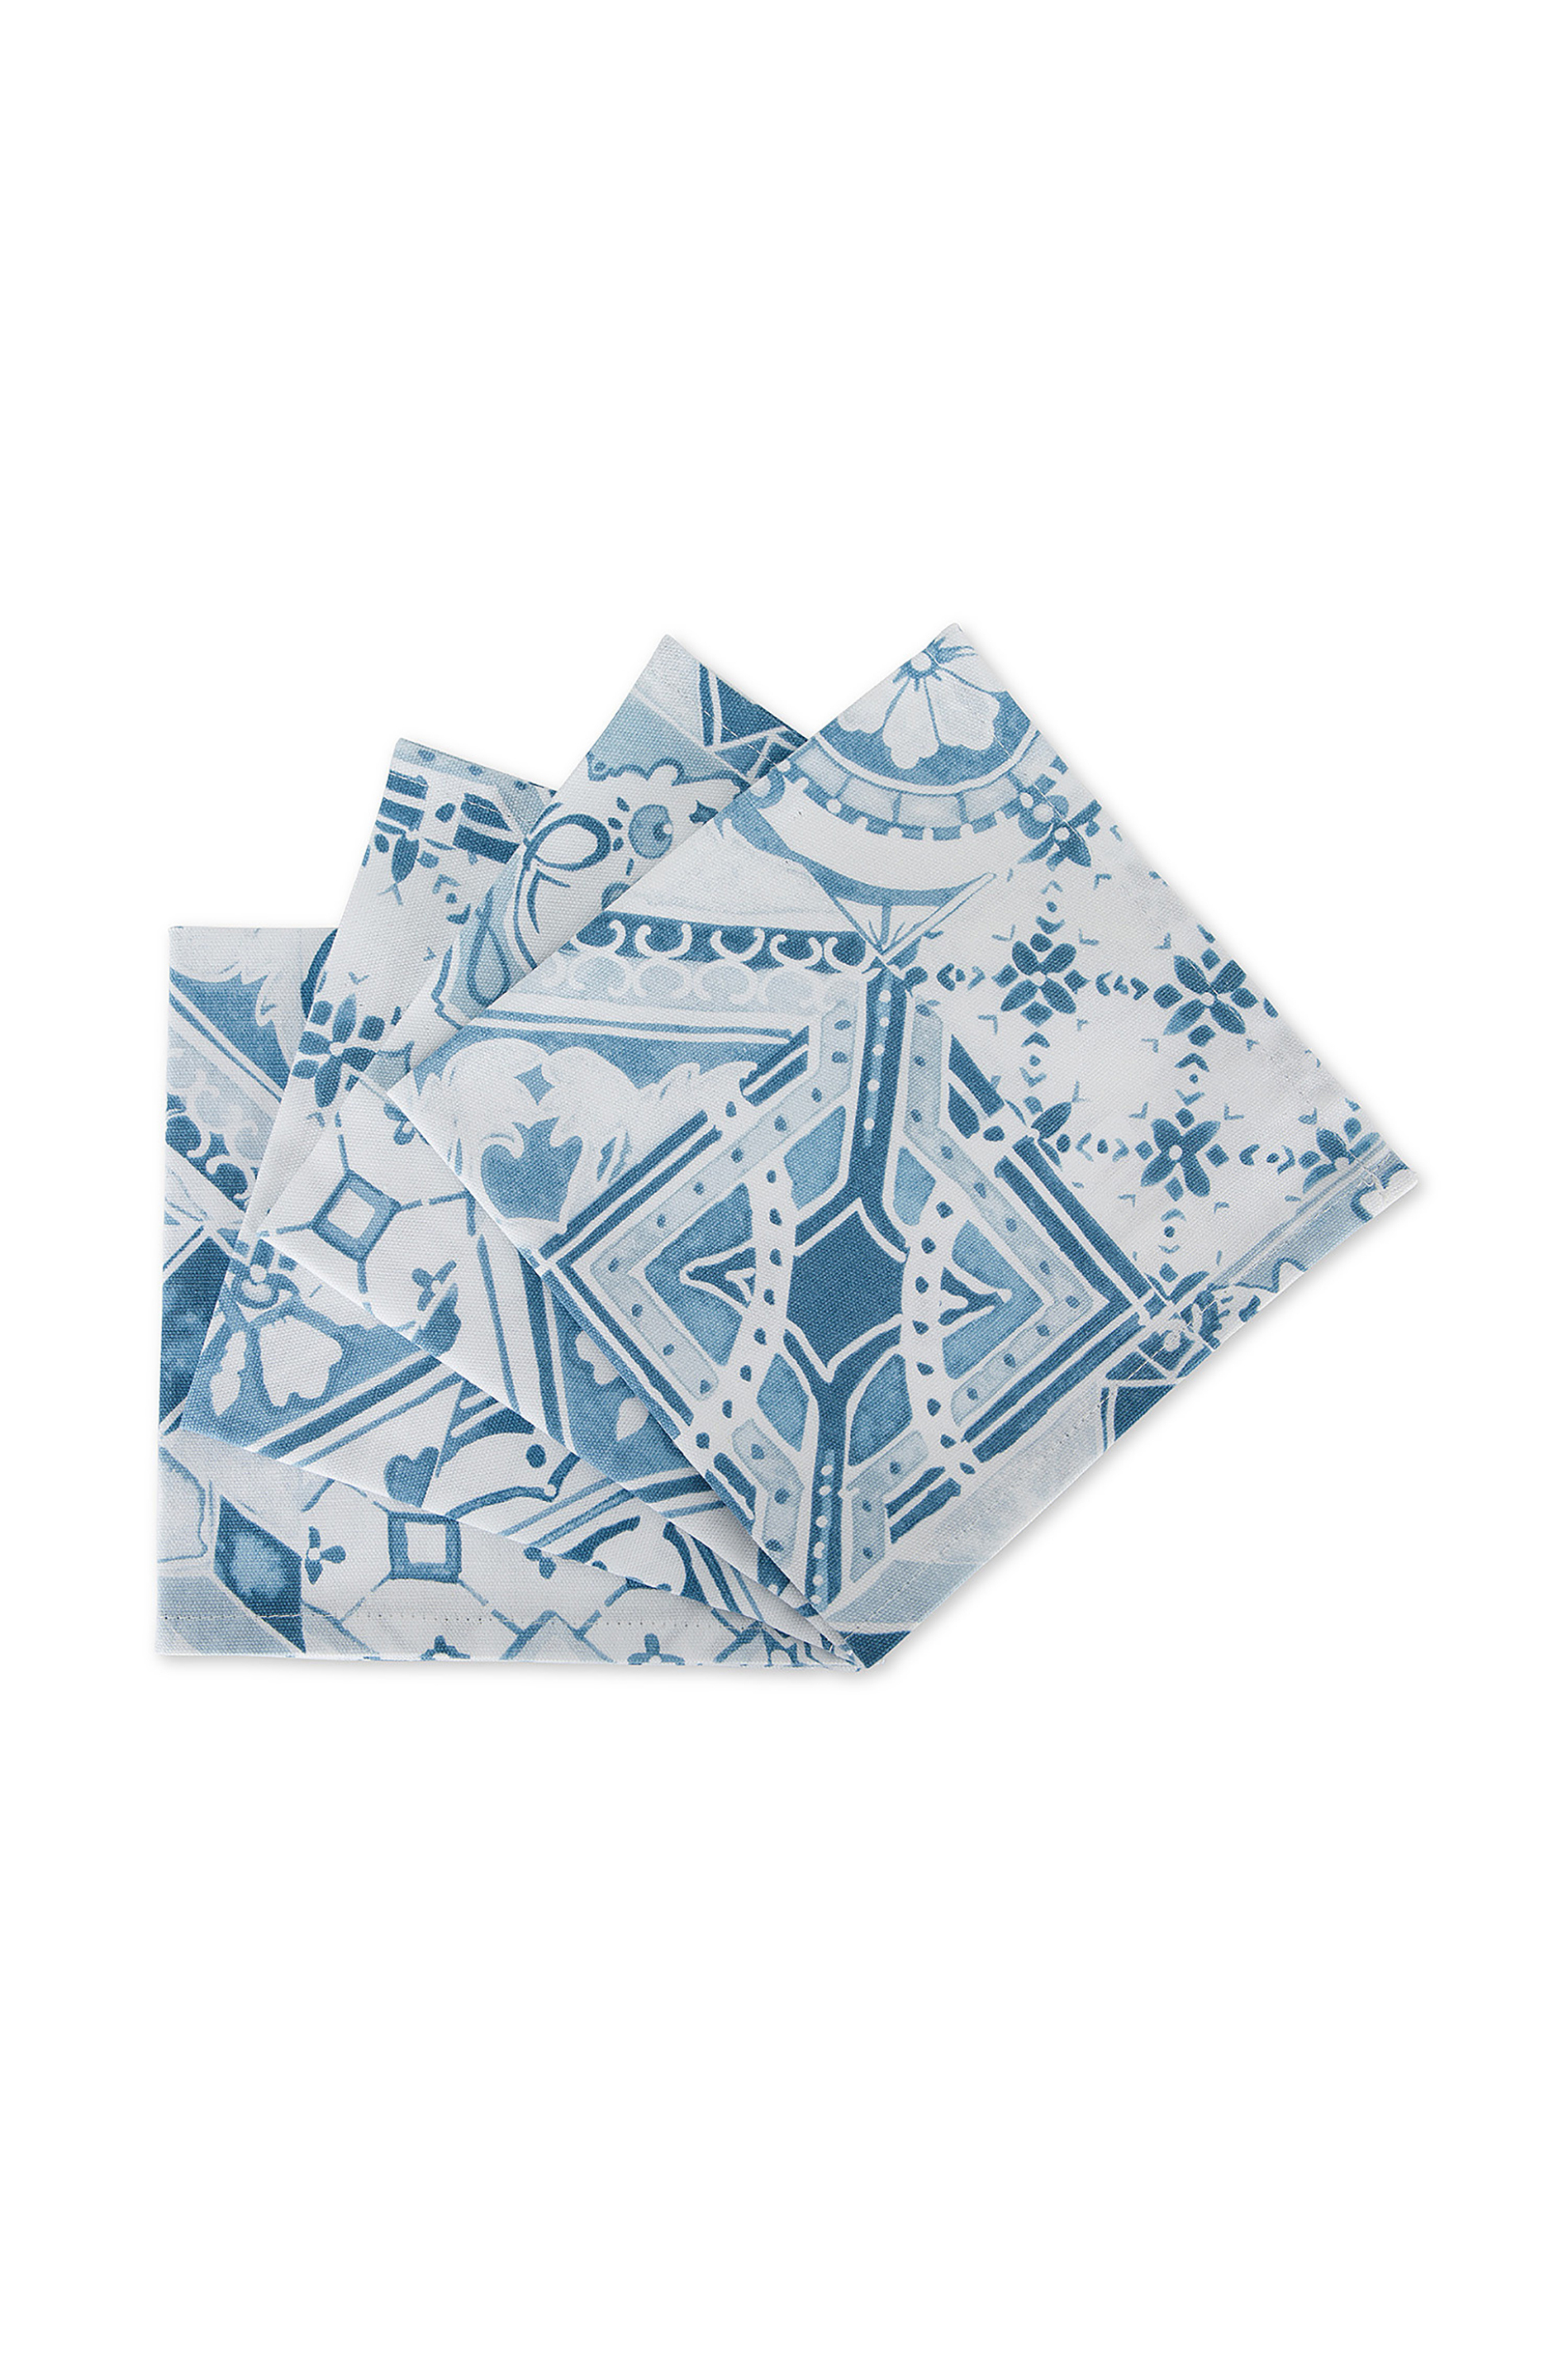 Coincasa σετ πετσέτες φαγητού με all-over print "Costiera" (4 τεμάχια) - 007255347 Denim Blue Ανοιχτό 2-7054006994|EE0248|